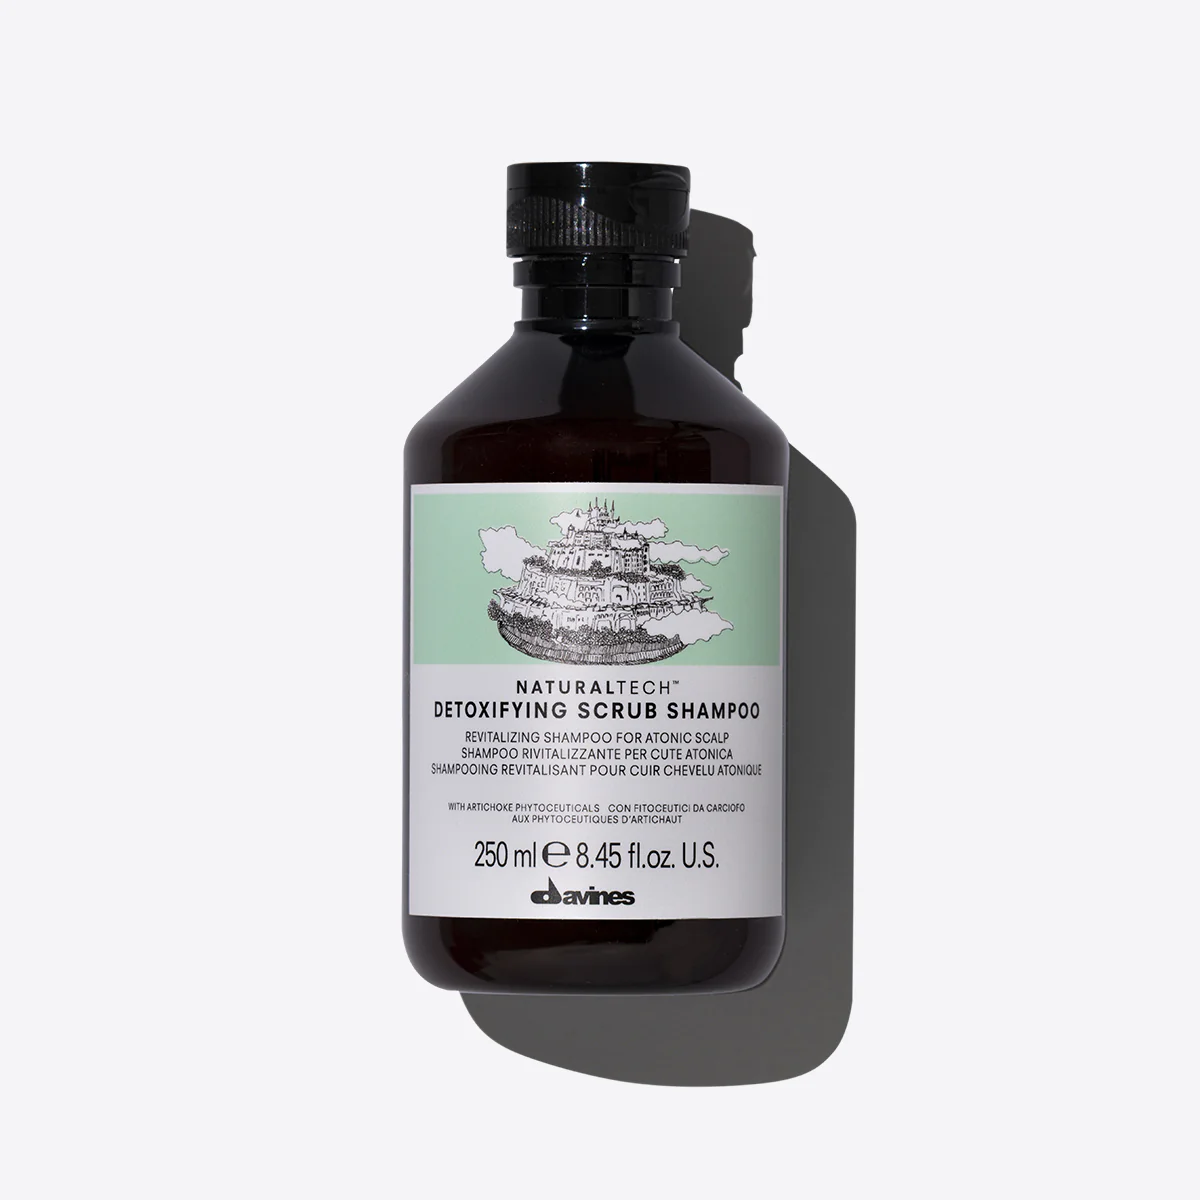 NaturalTech Detoxifying Scrub Shampoo - Детоксицирующий шампунь-скраб , объем 250 мл - фото 1